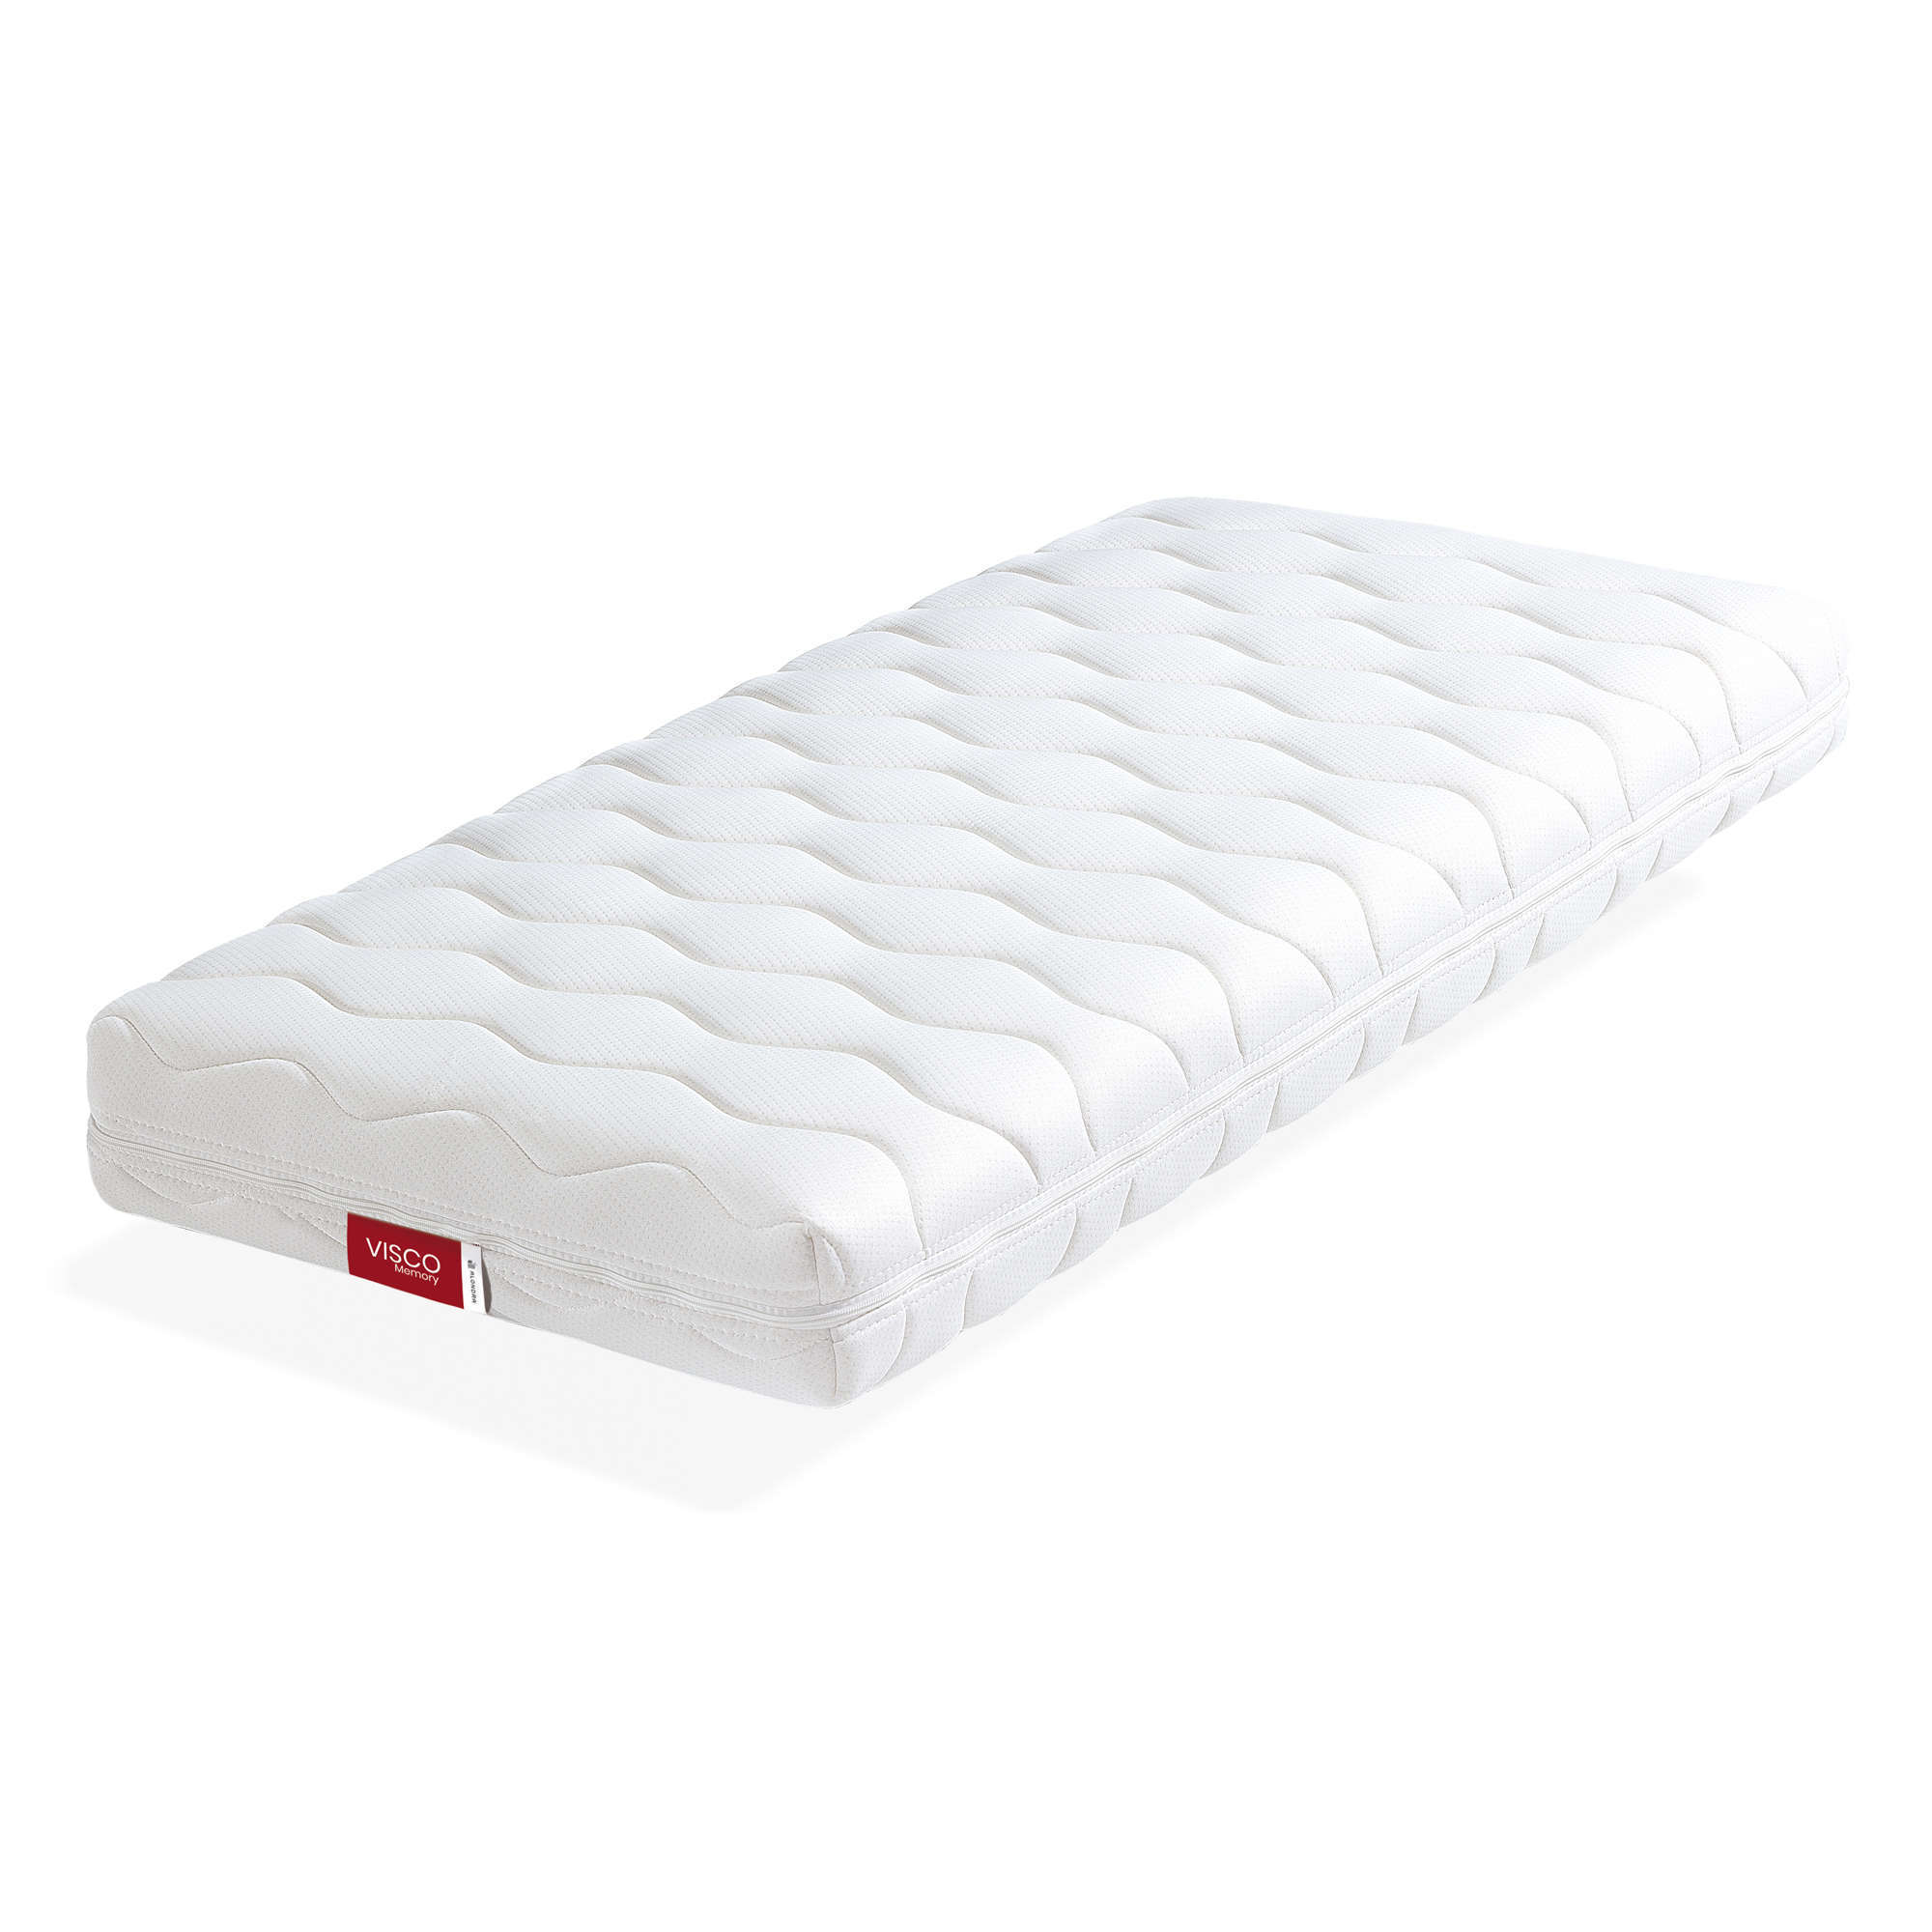 Mmeory foam mattress 70x140cm